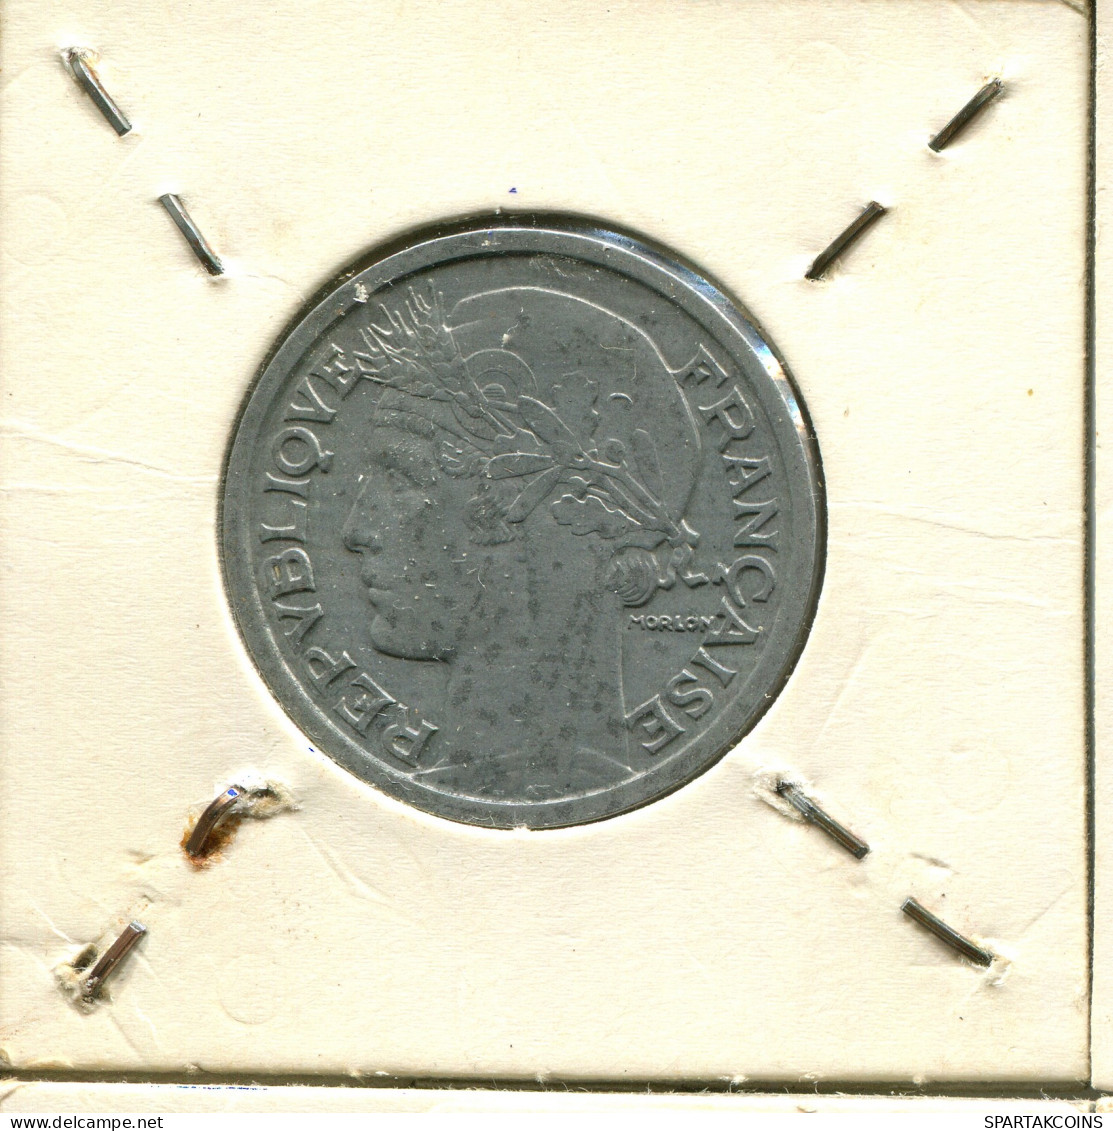 2 FRANCS 1950 FRANCIA FRANCE Moneda #AW381.E - 2 Francs